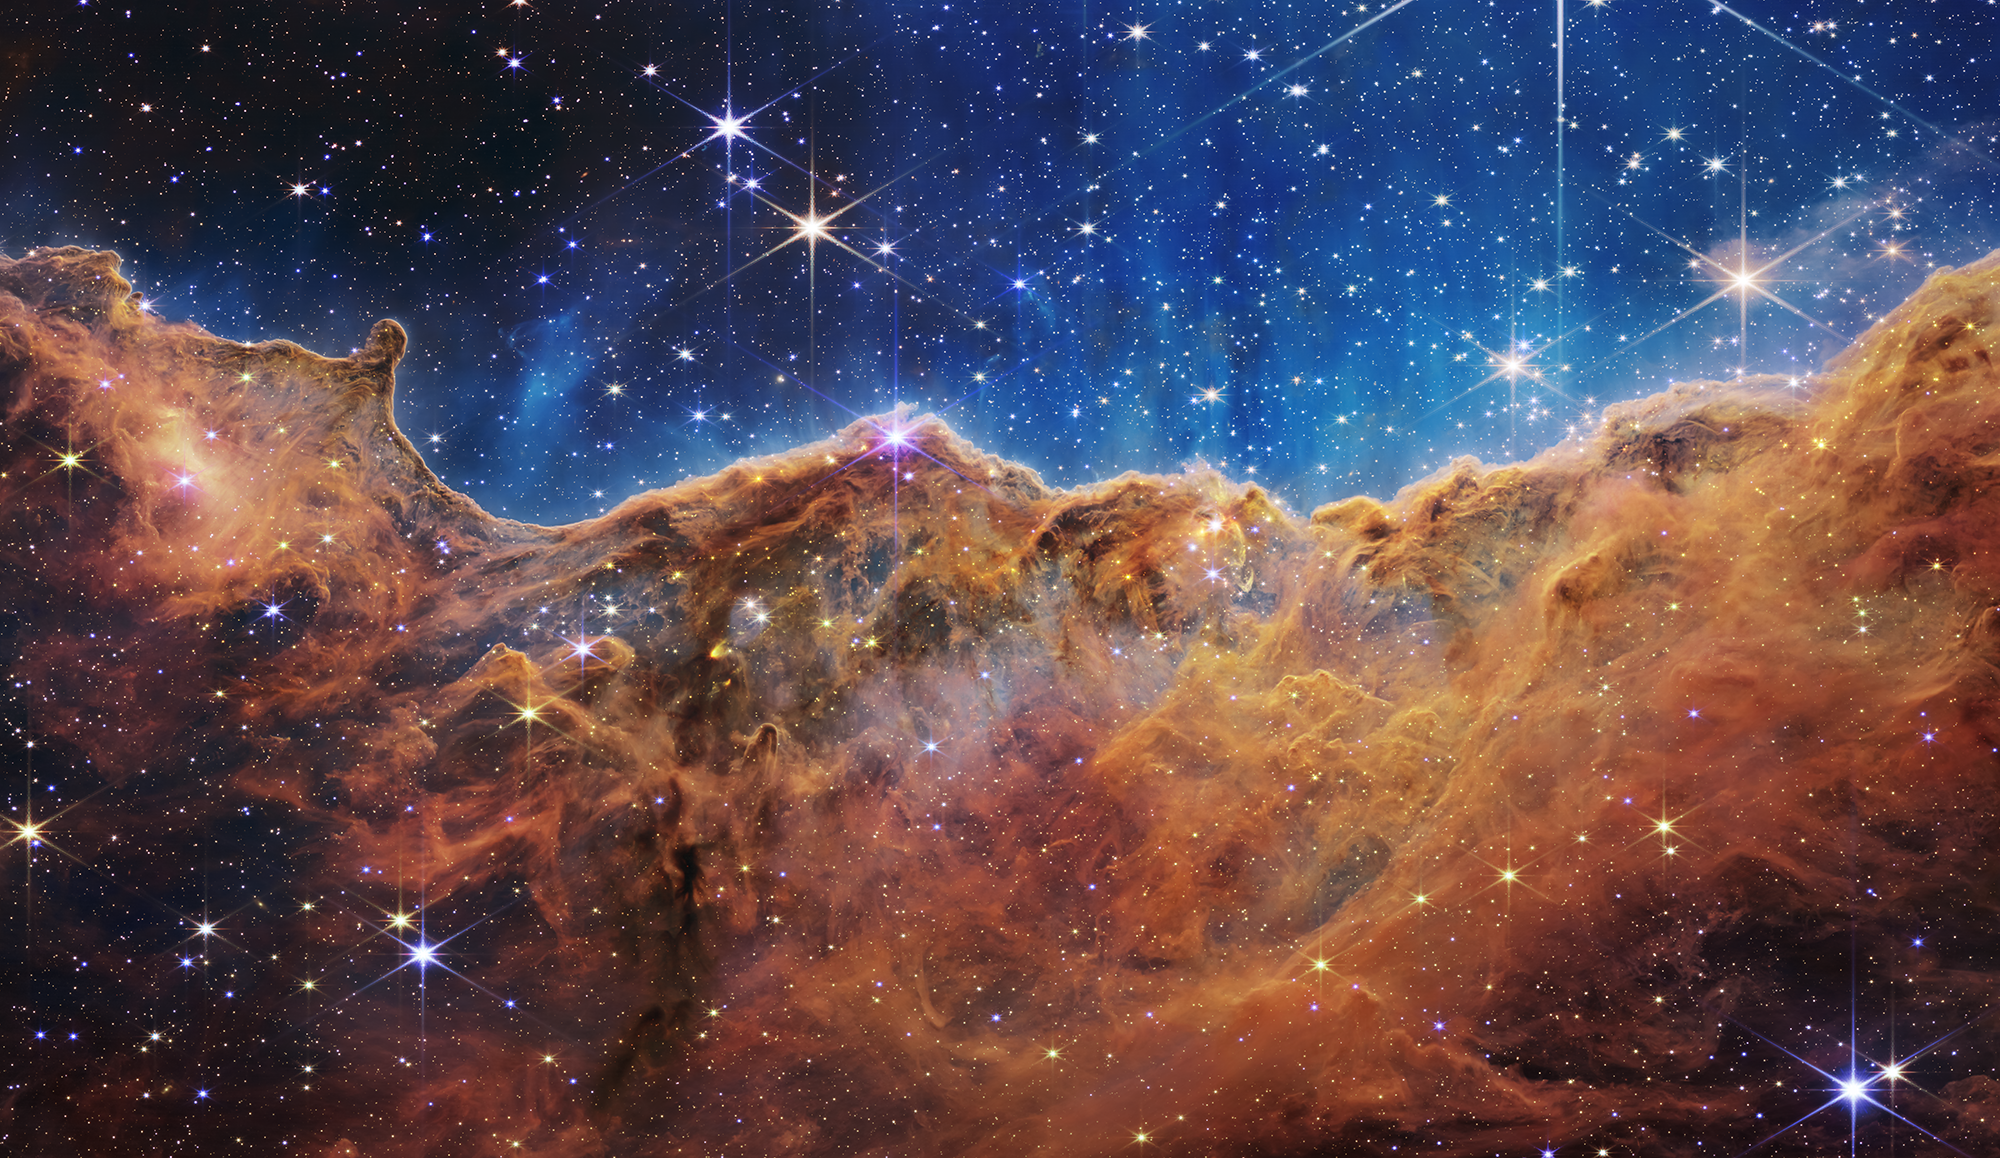 Near-infrared view of the Carina Nebula taken by JWST